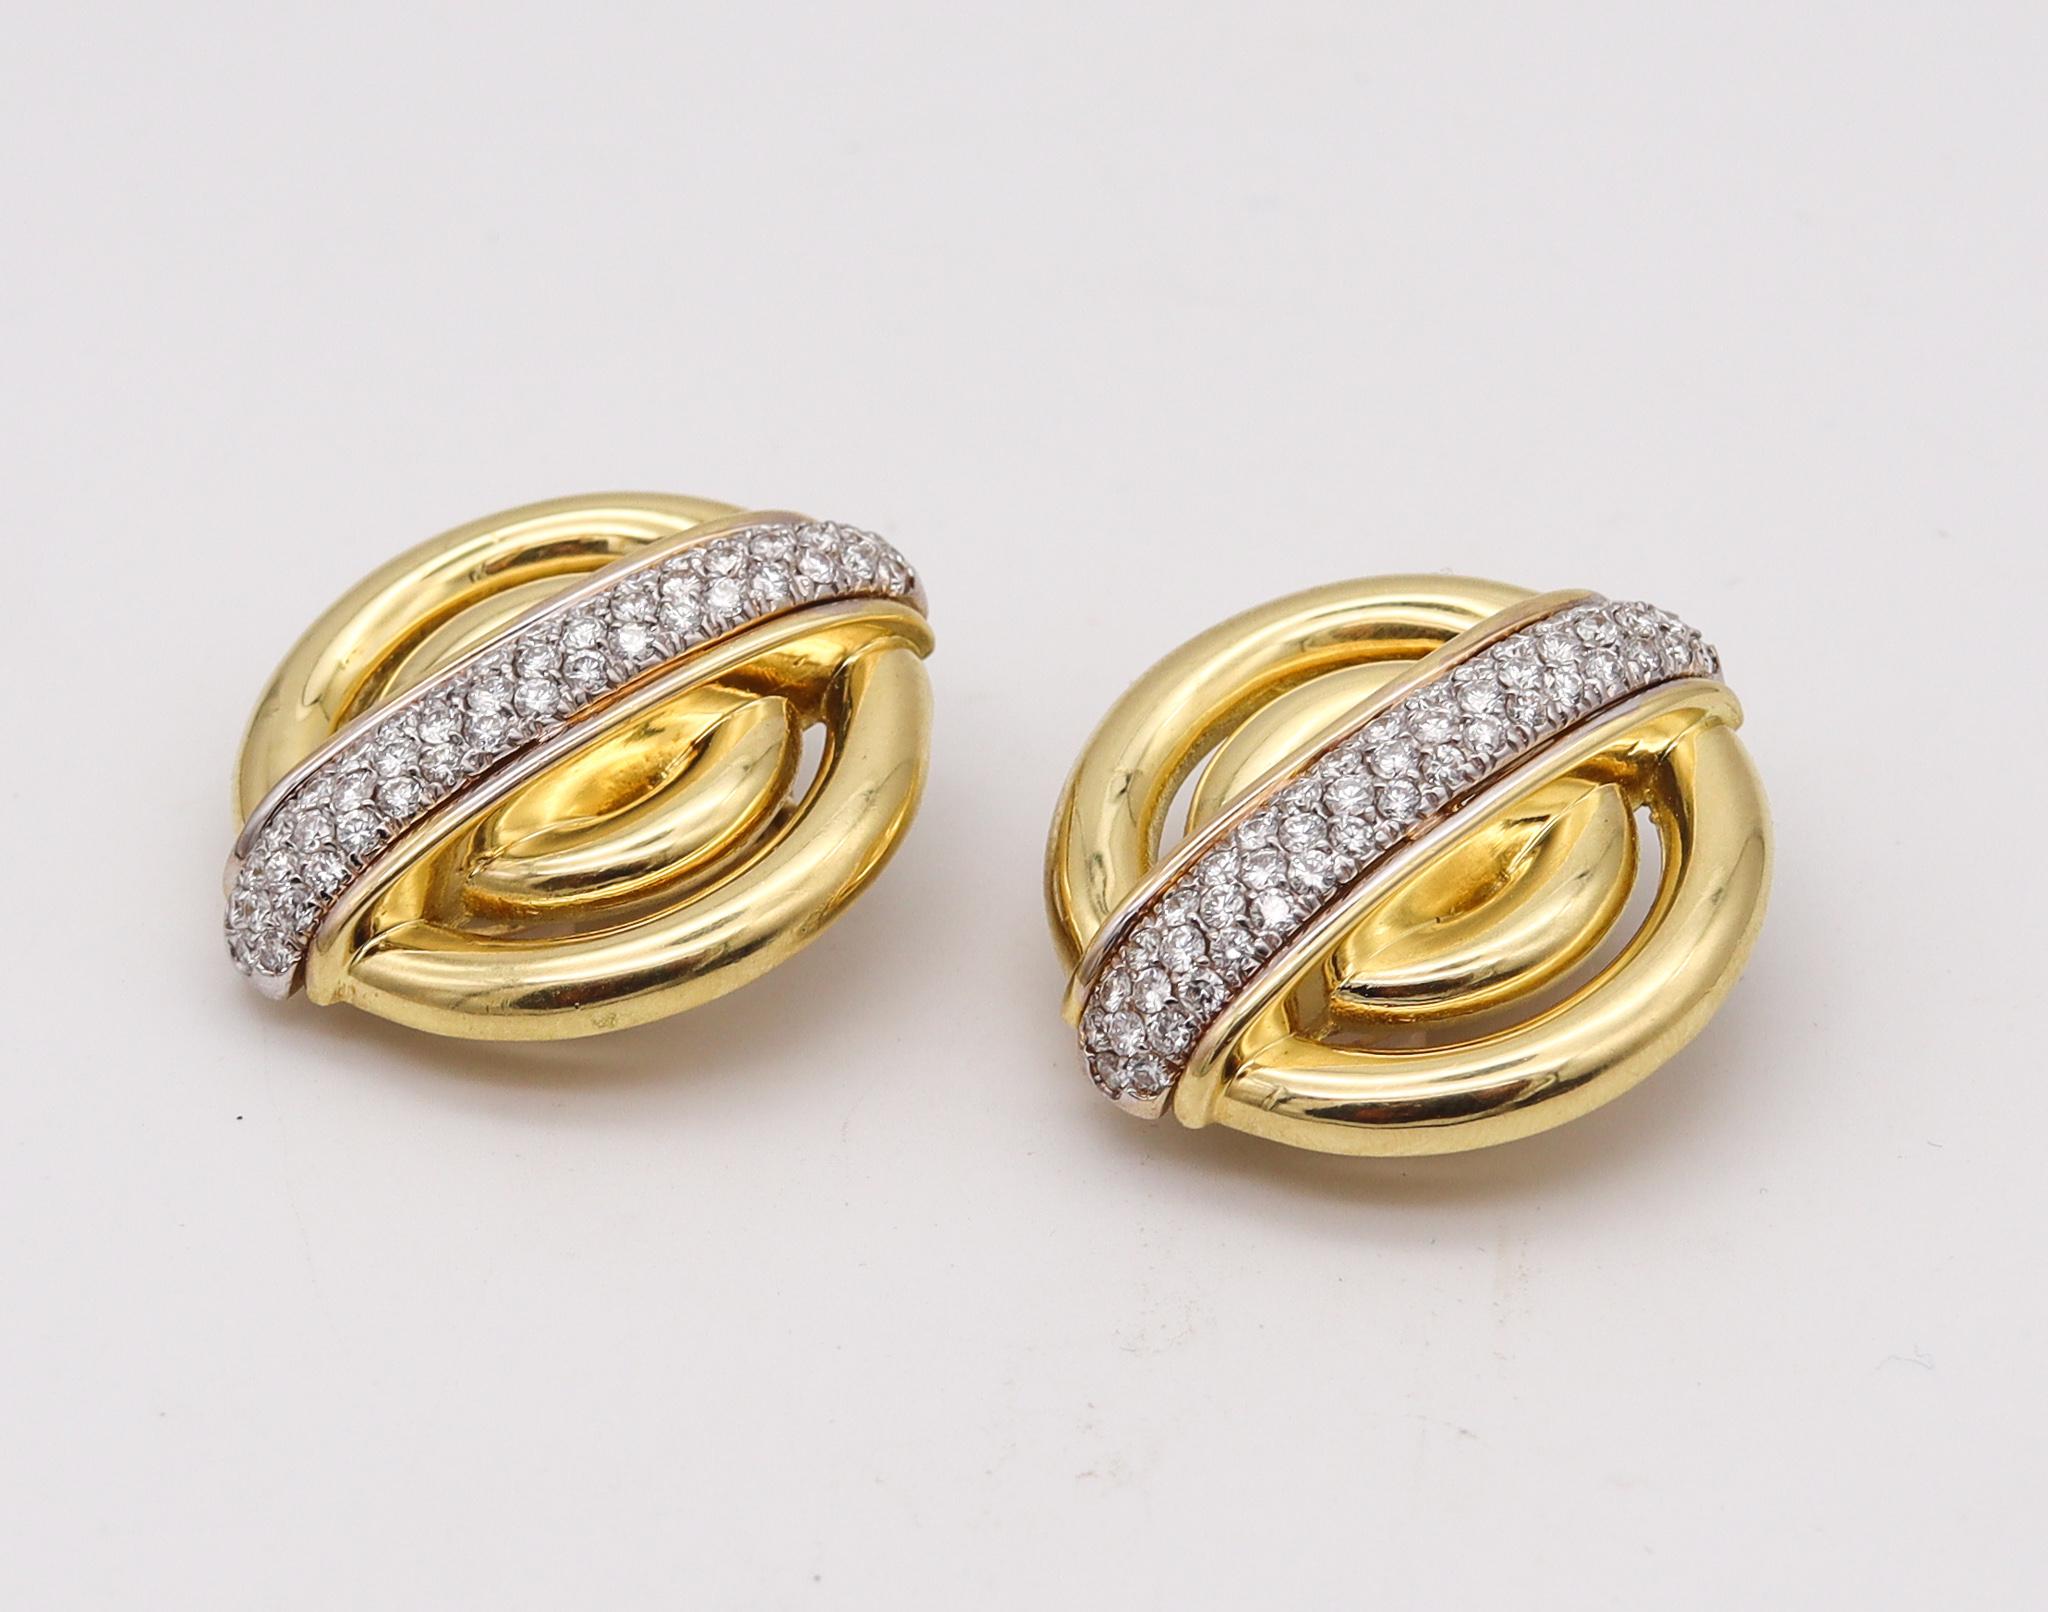 Modernist Cartier 1974 Aldo Cipullo Clip Earrings 18Kt Gold with 4.96 Ctw in Diamonds